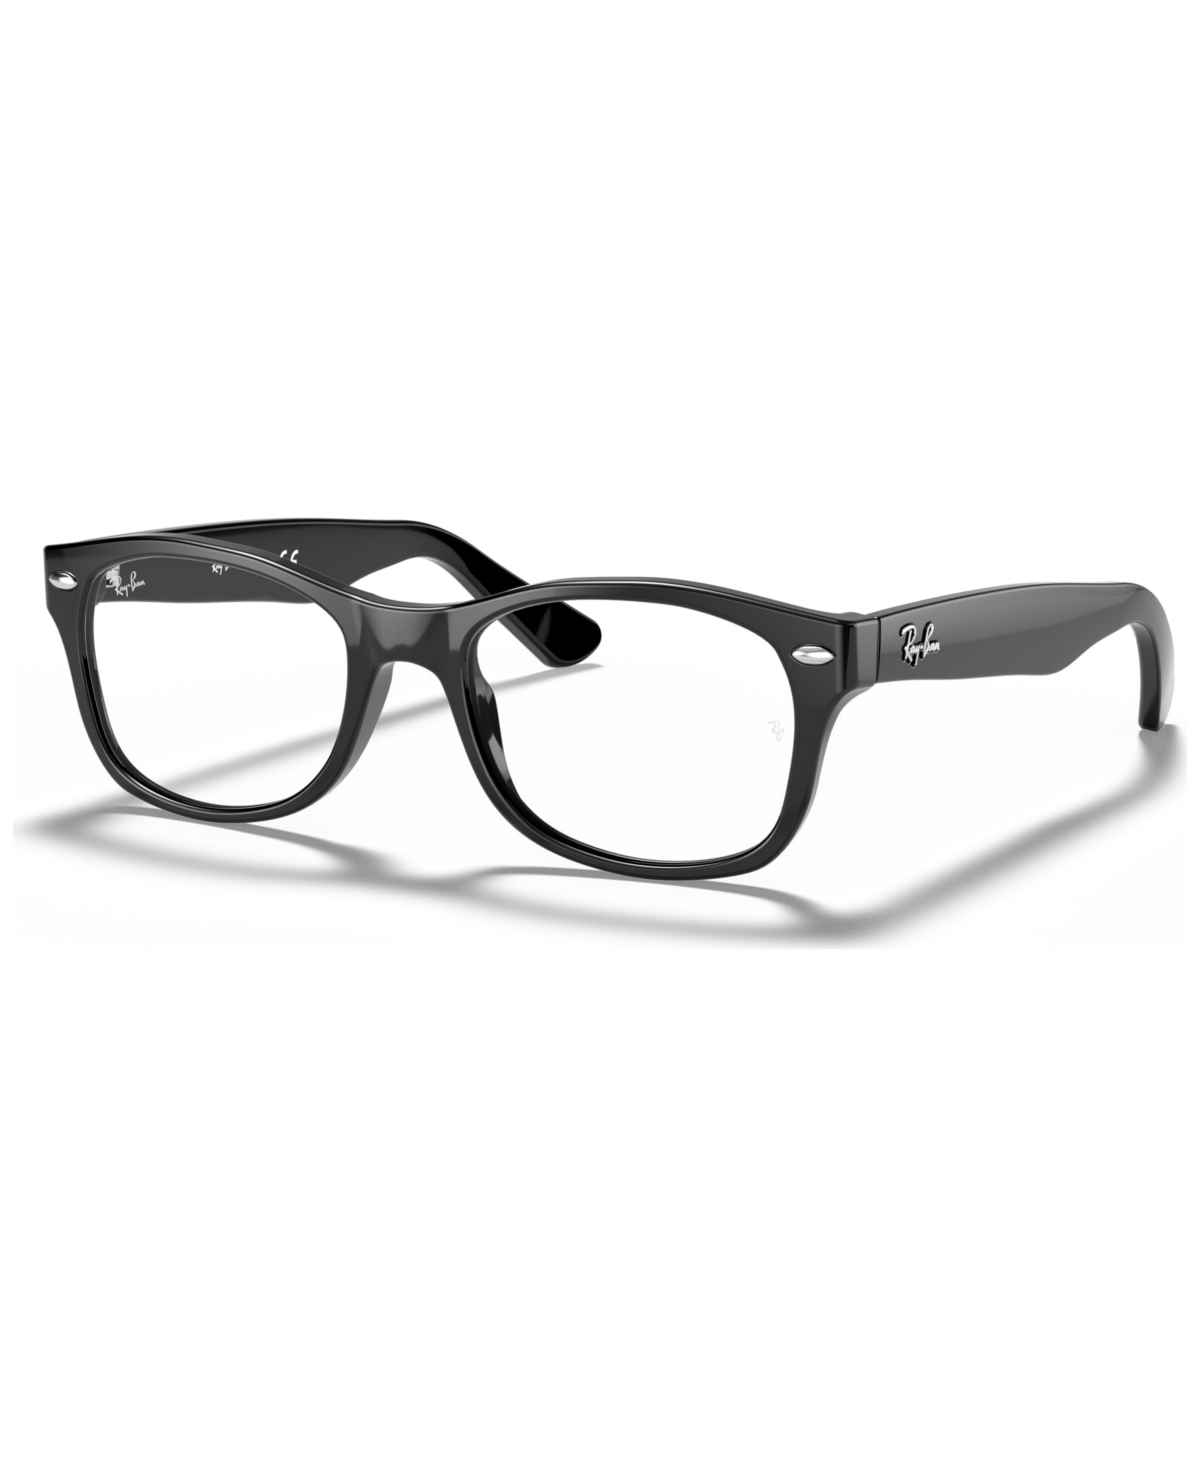 RY1528 Child Square Eyeglasses - Black